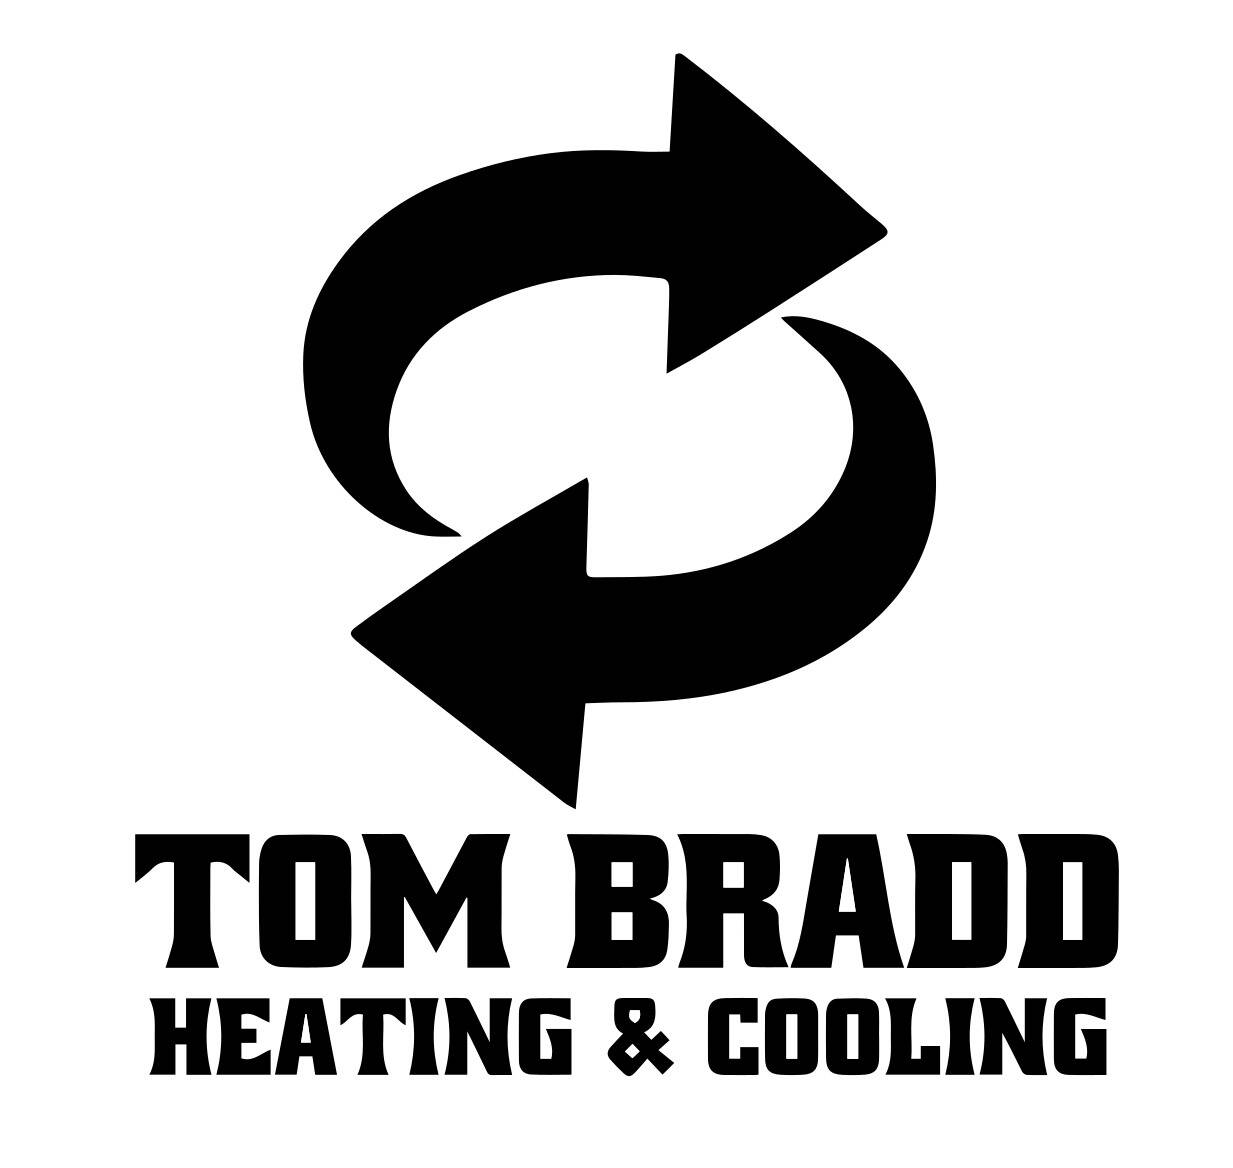 Tom Bradd Heating & Cooling